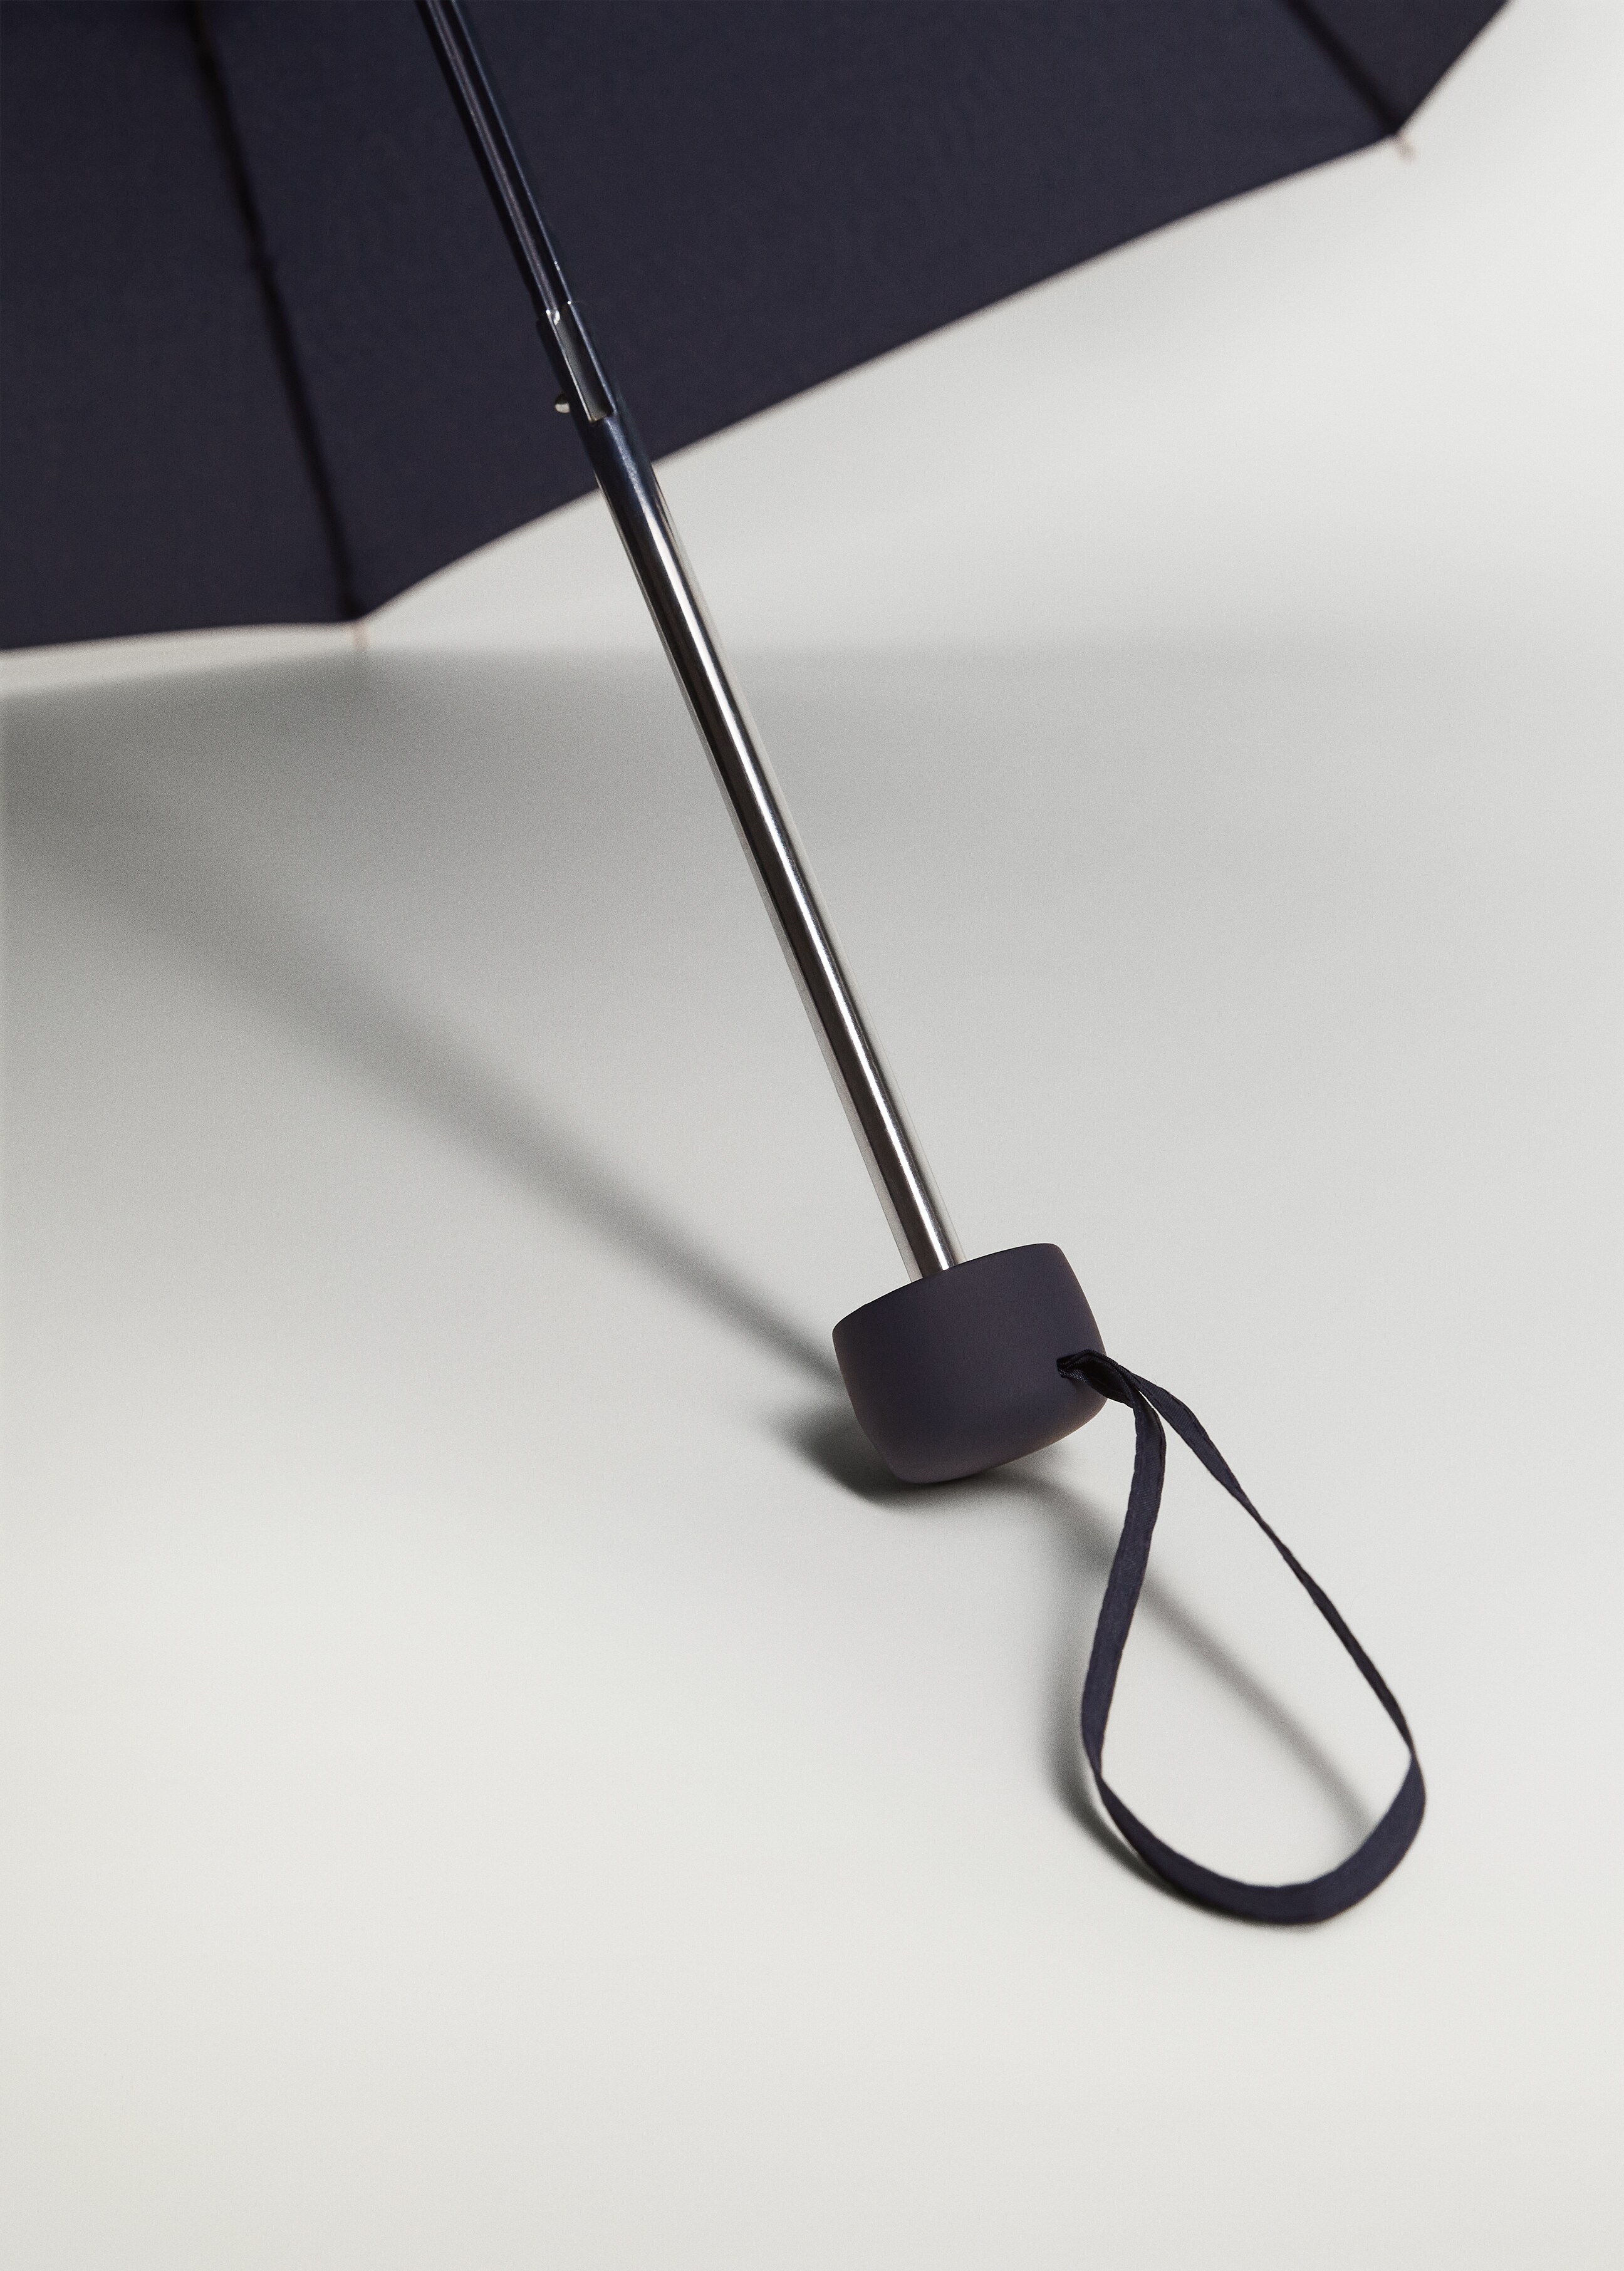 Plain folding umbrella - Details of the article 2